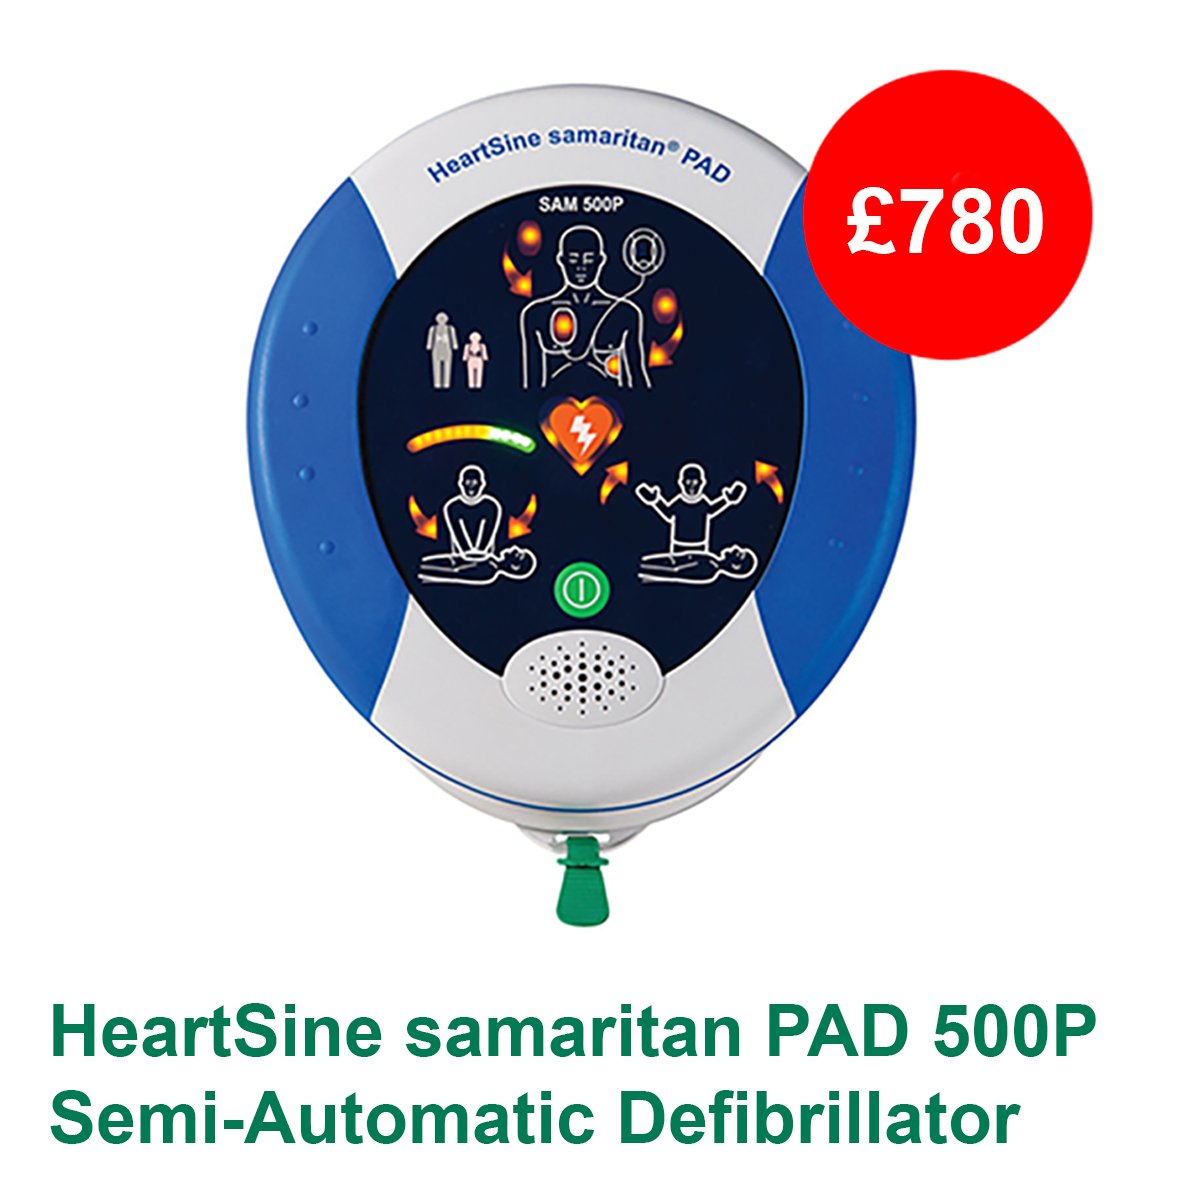 HeartSine samaritan PAD 500P Semi-Automatic Defibrillator